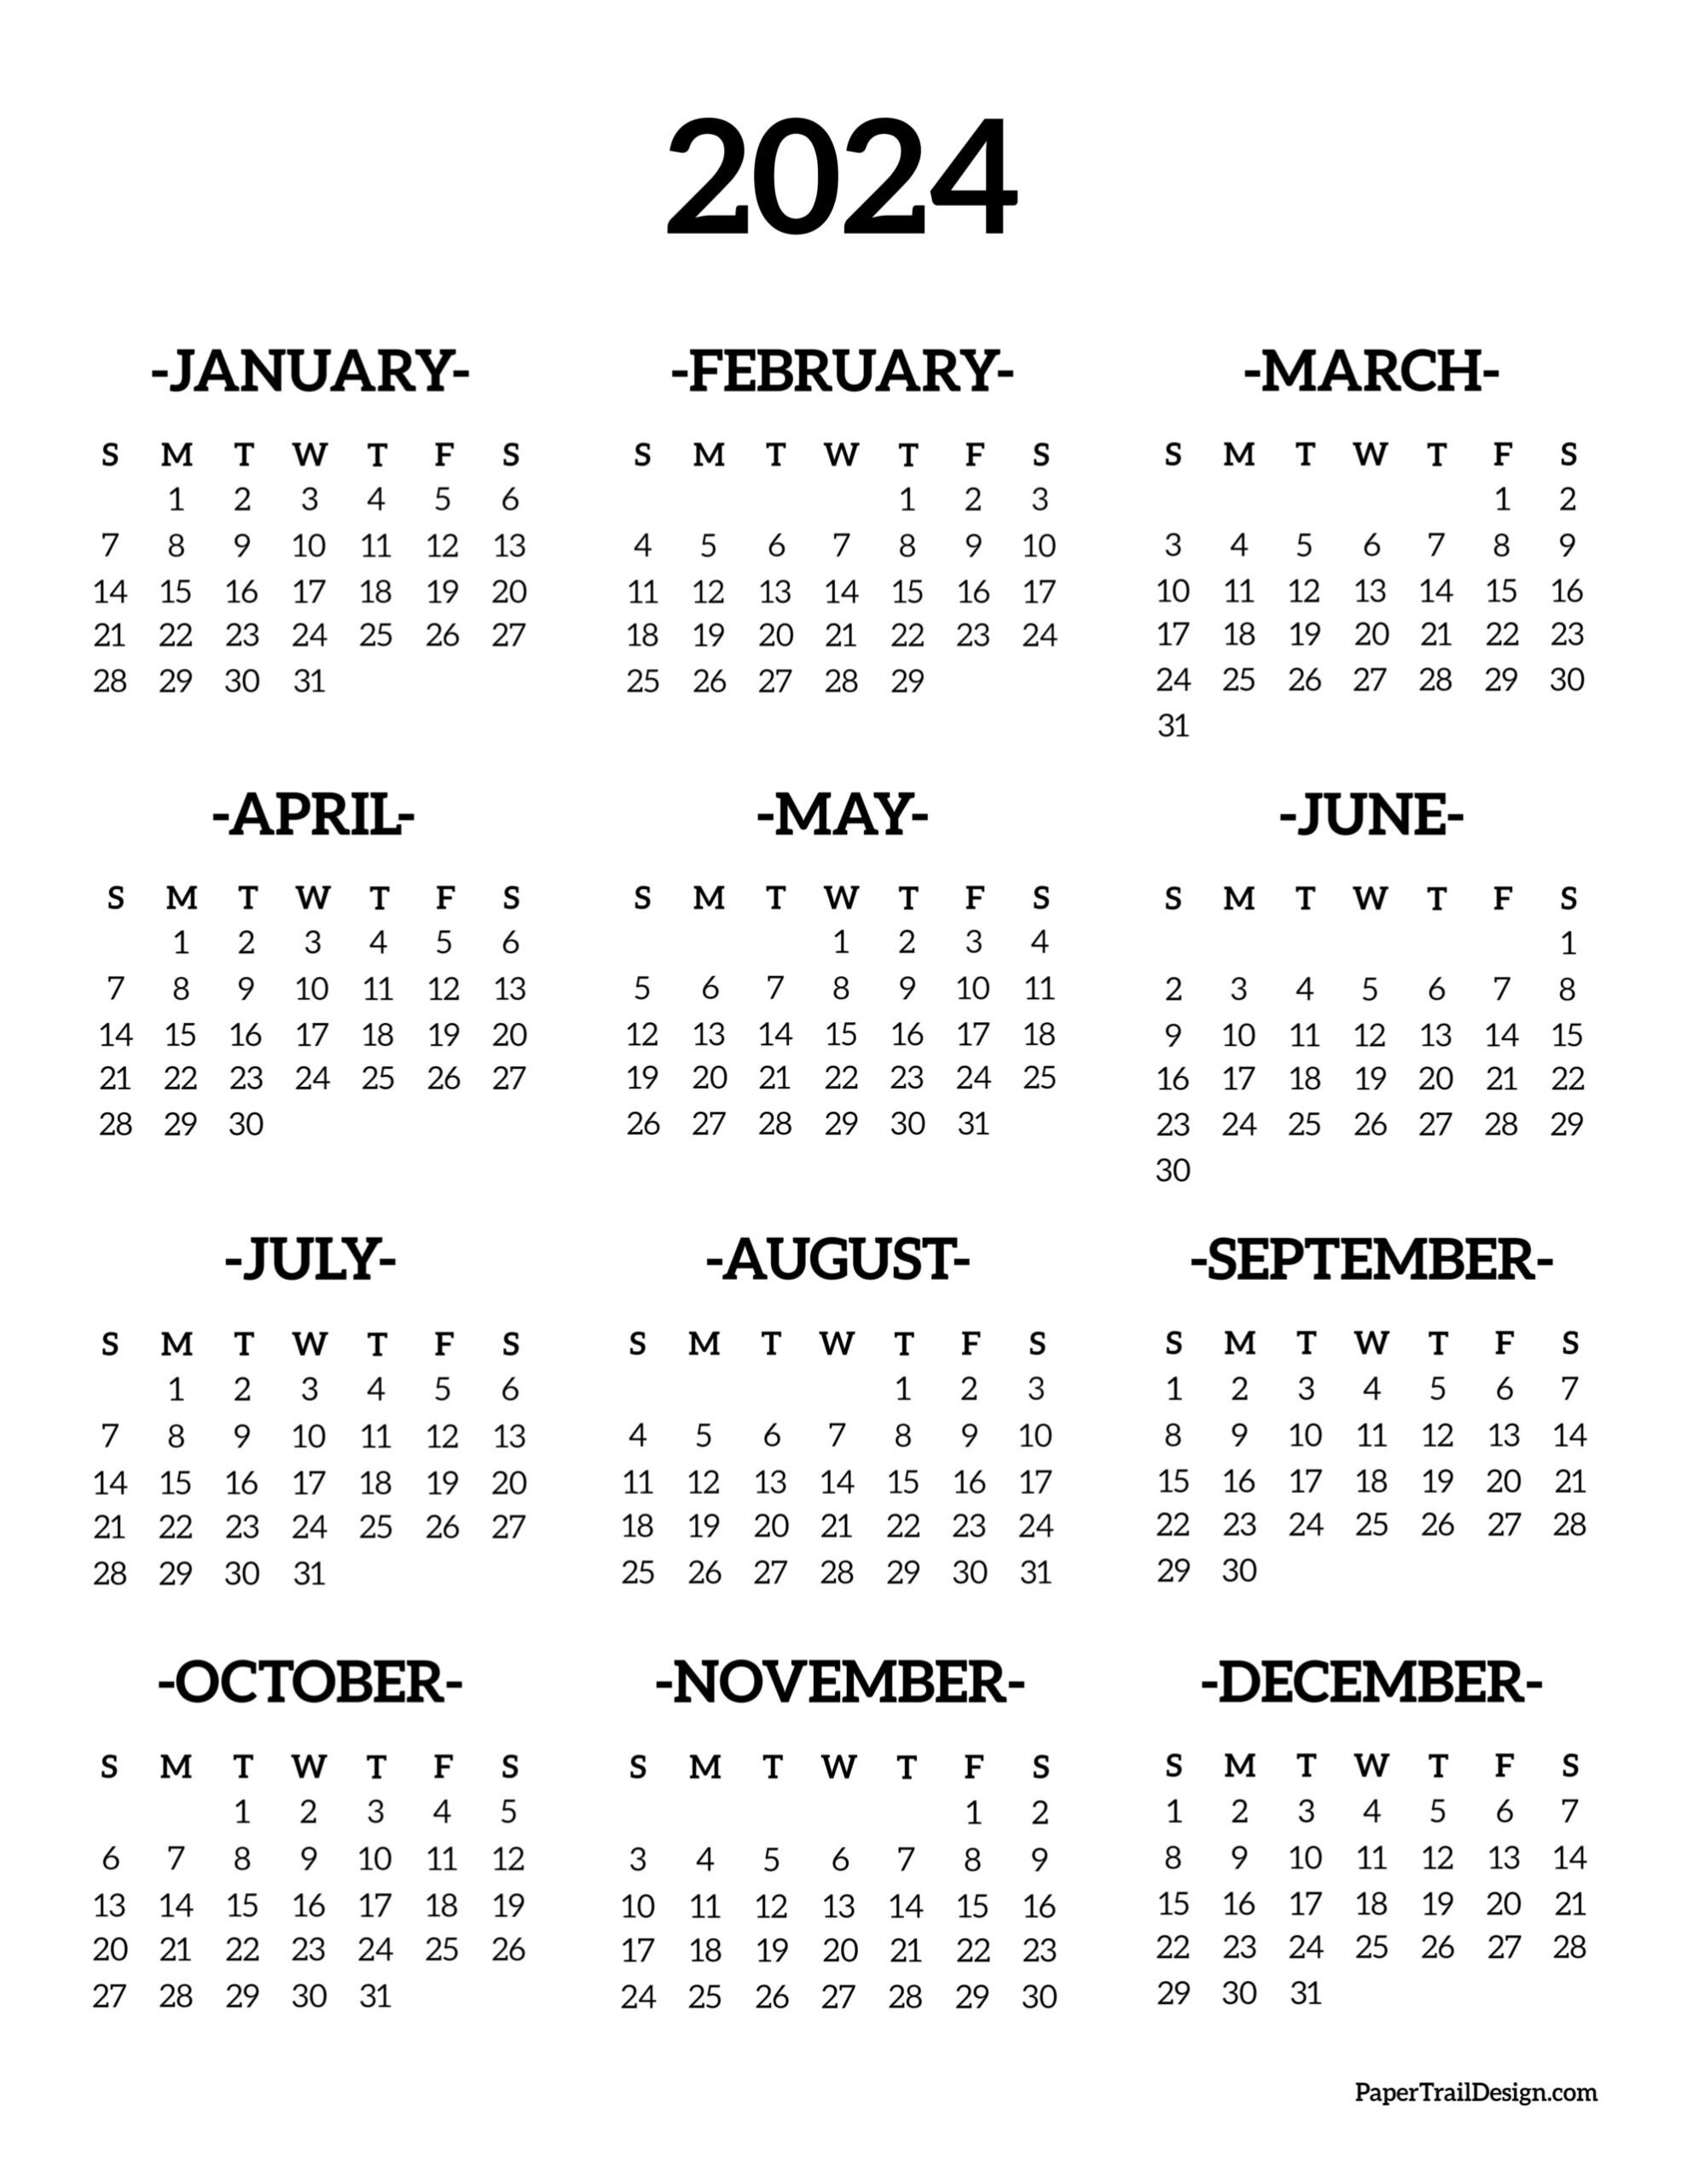 Calendar 2024 Printable One Page - Paper Trail Design regarding Free Printable Calendar 2024 Year At A Glance